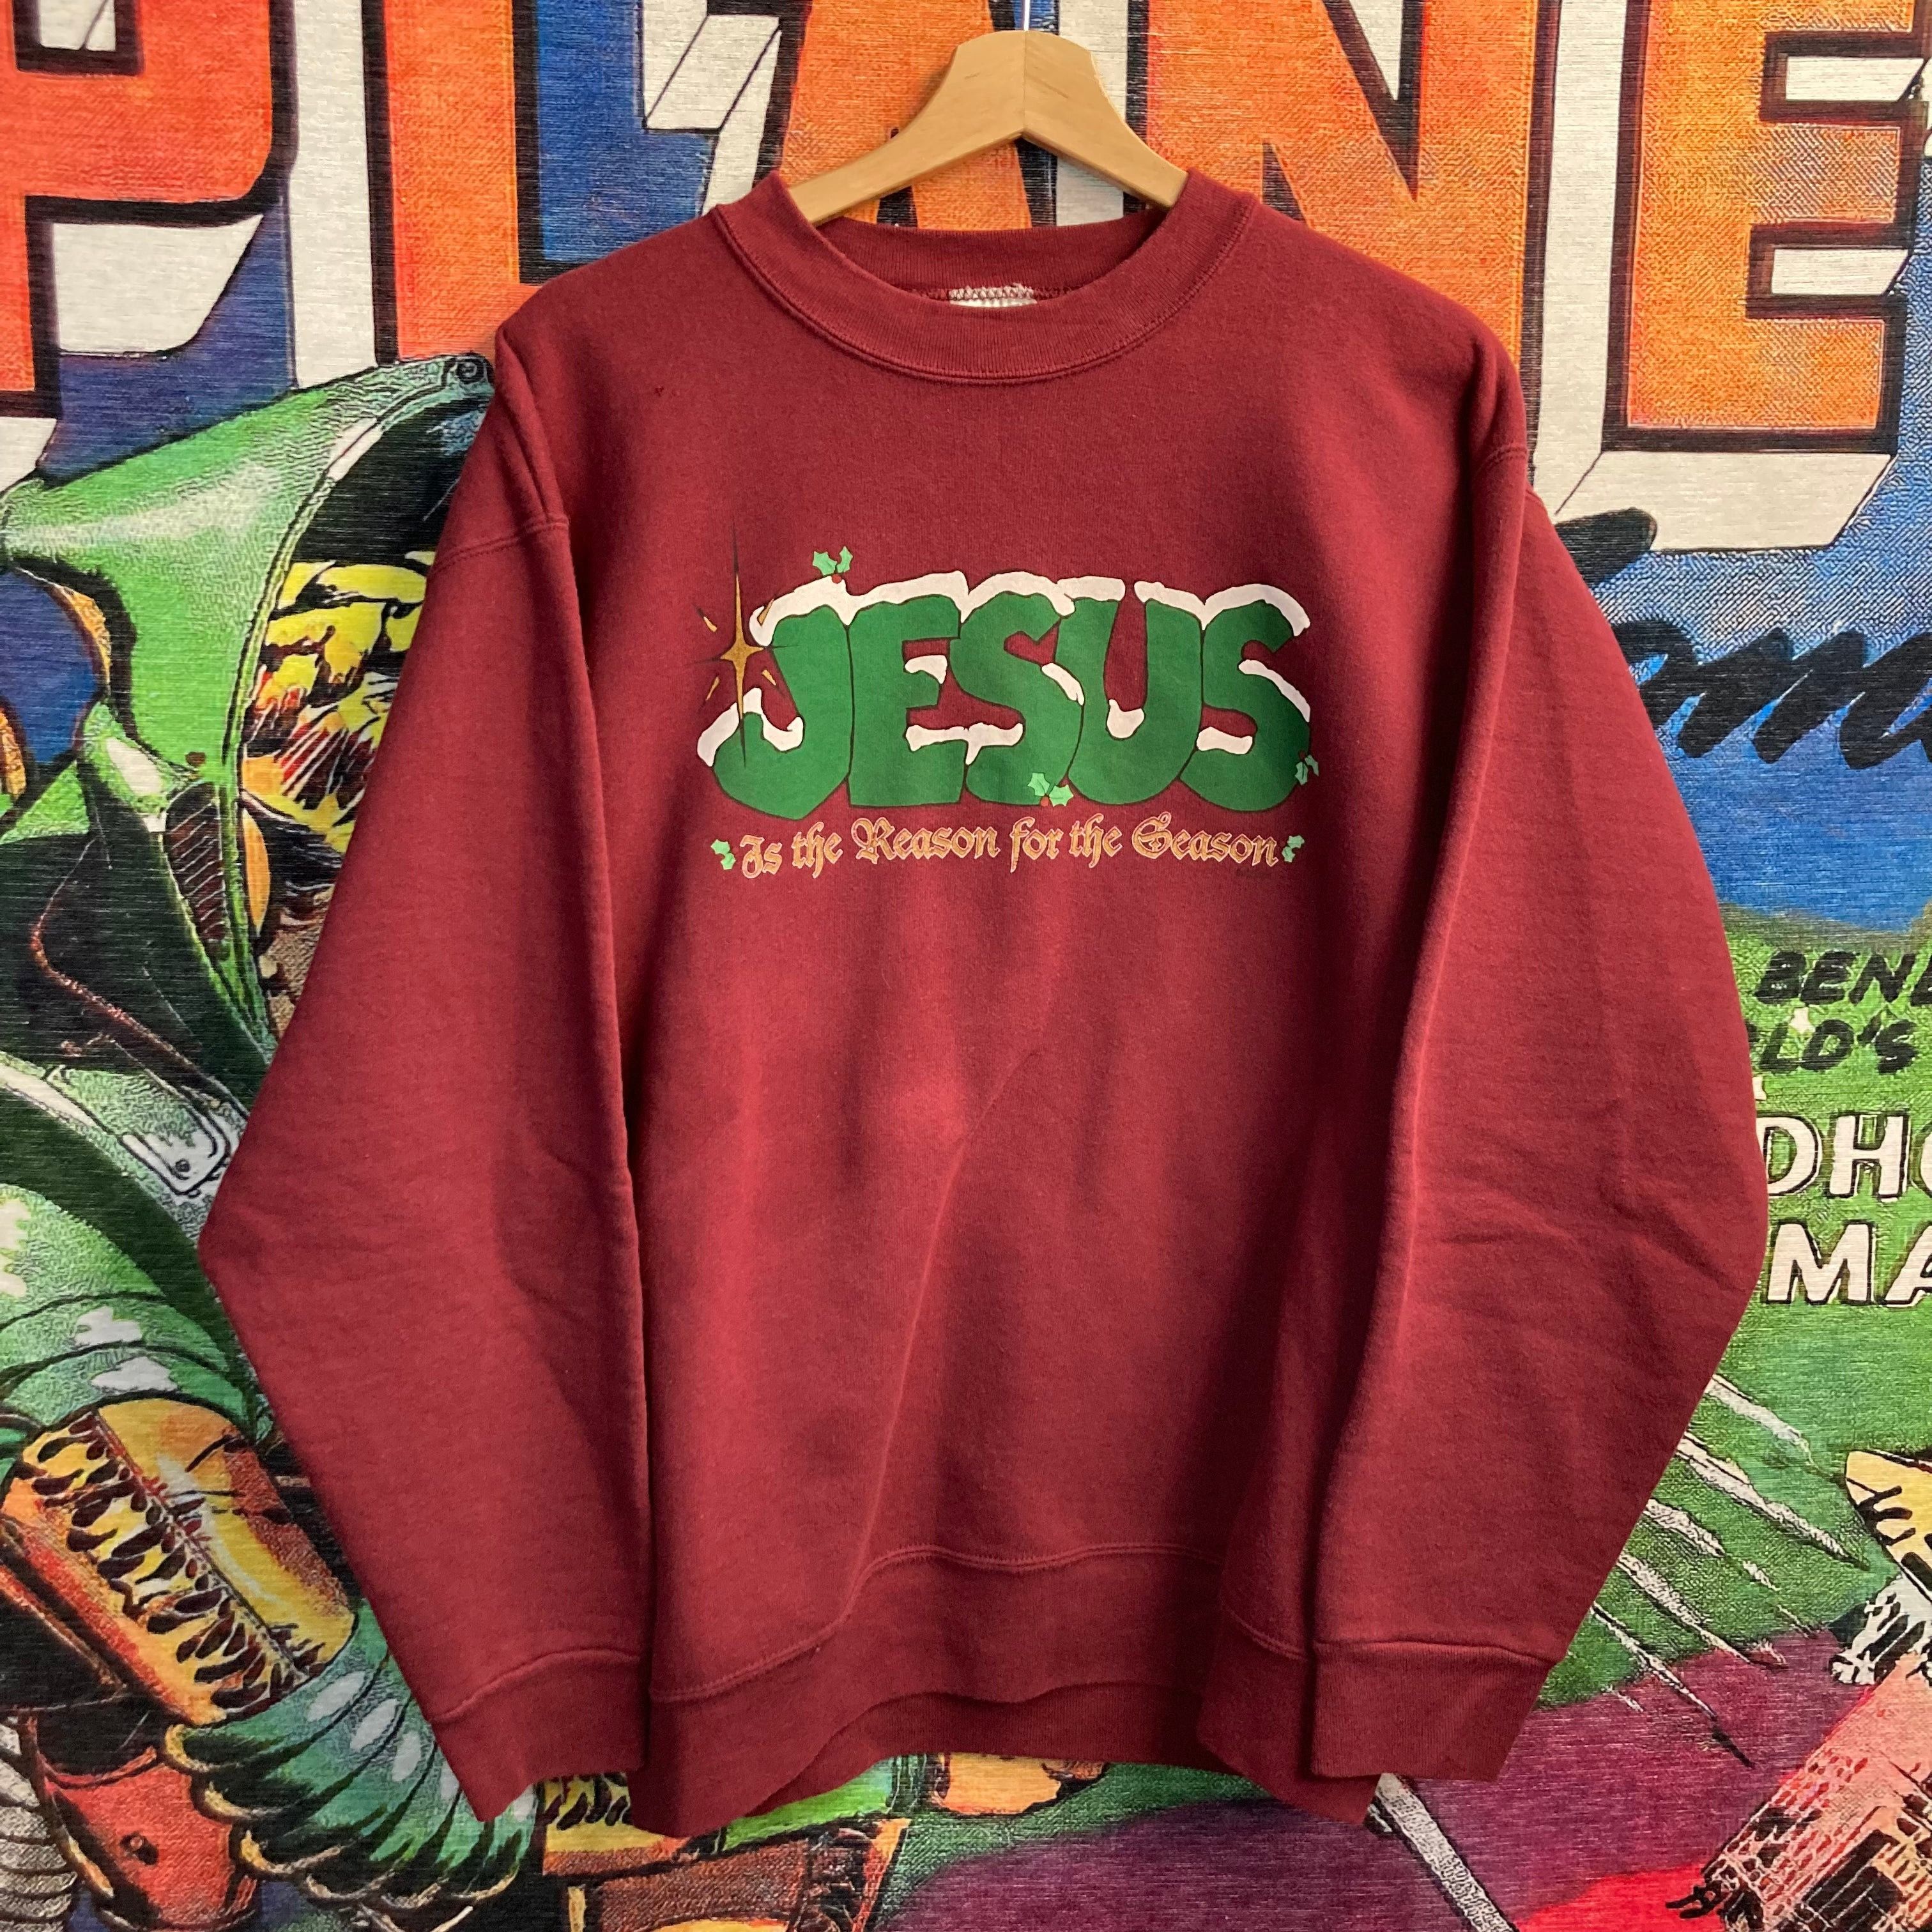 Vintage 90’s Jesus Is The Reason For The Season Sweatshirt Sz. Large Size US L / EU 52-54 / 3 - 1 Preview